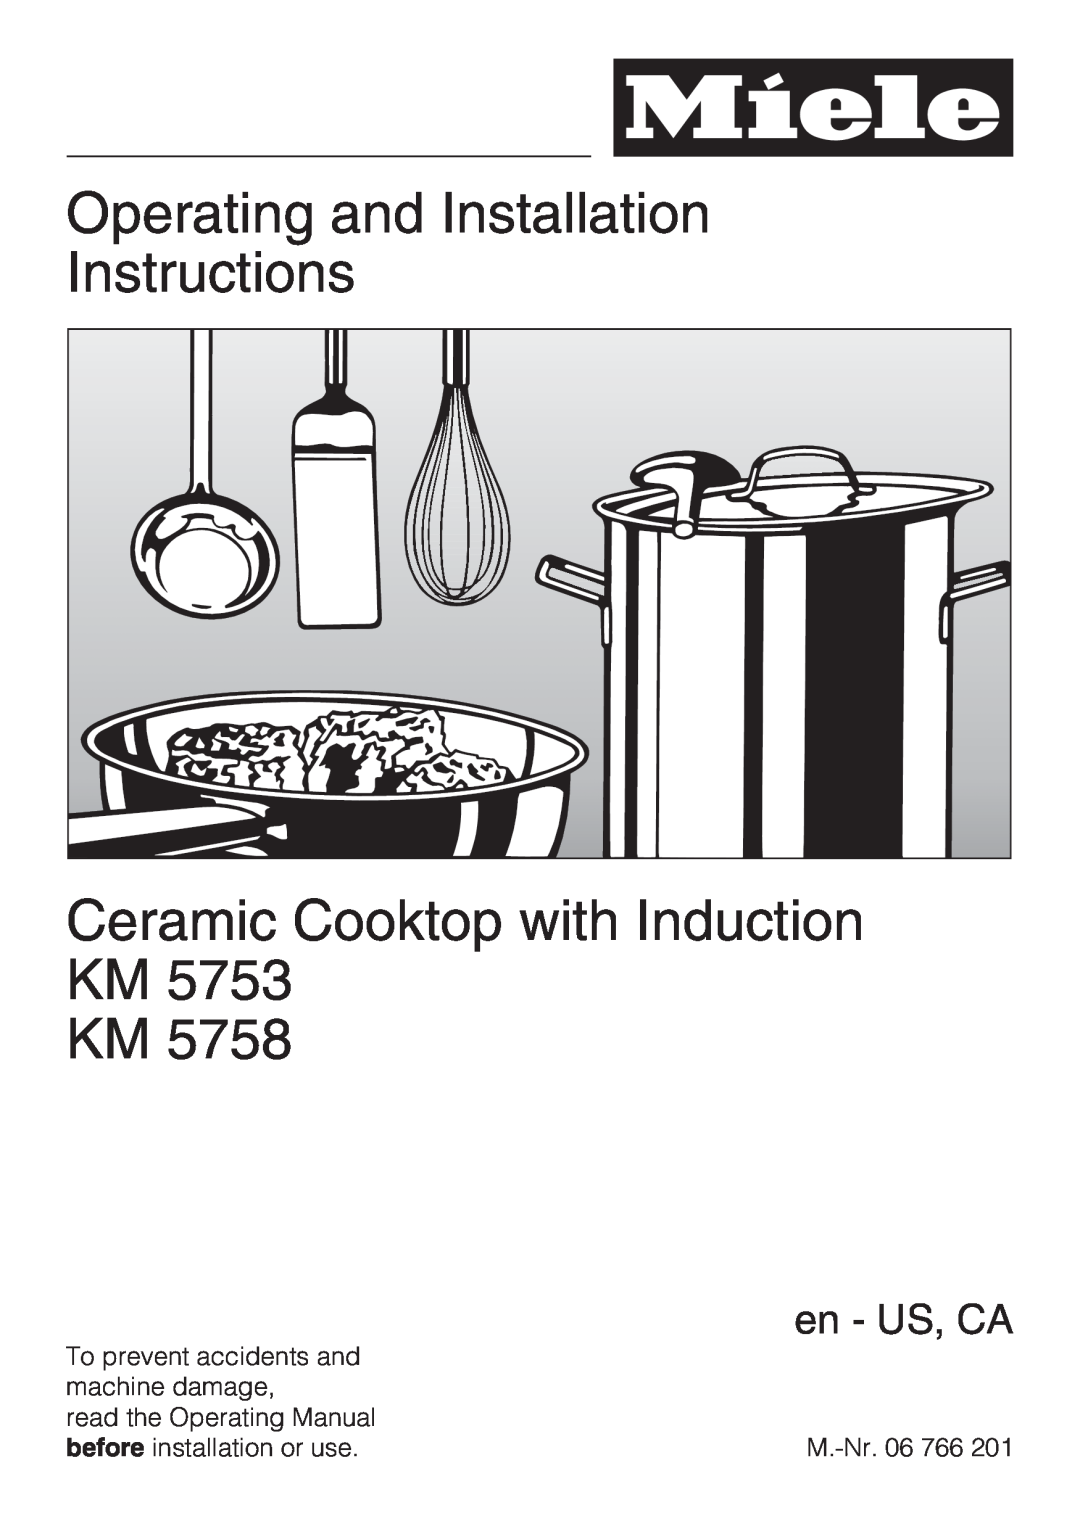 Miele KM 5753 installation instructions Operating and Installation Instructions, Ceramic Cooktop with Induction KM KM 